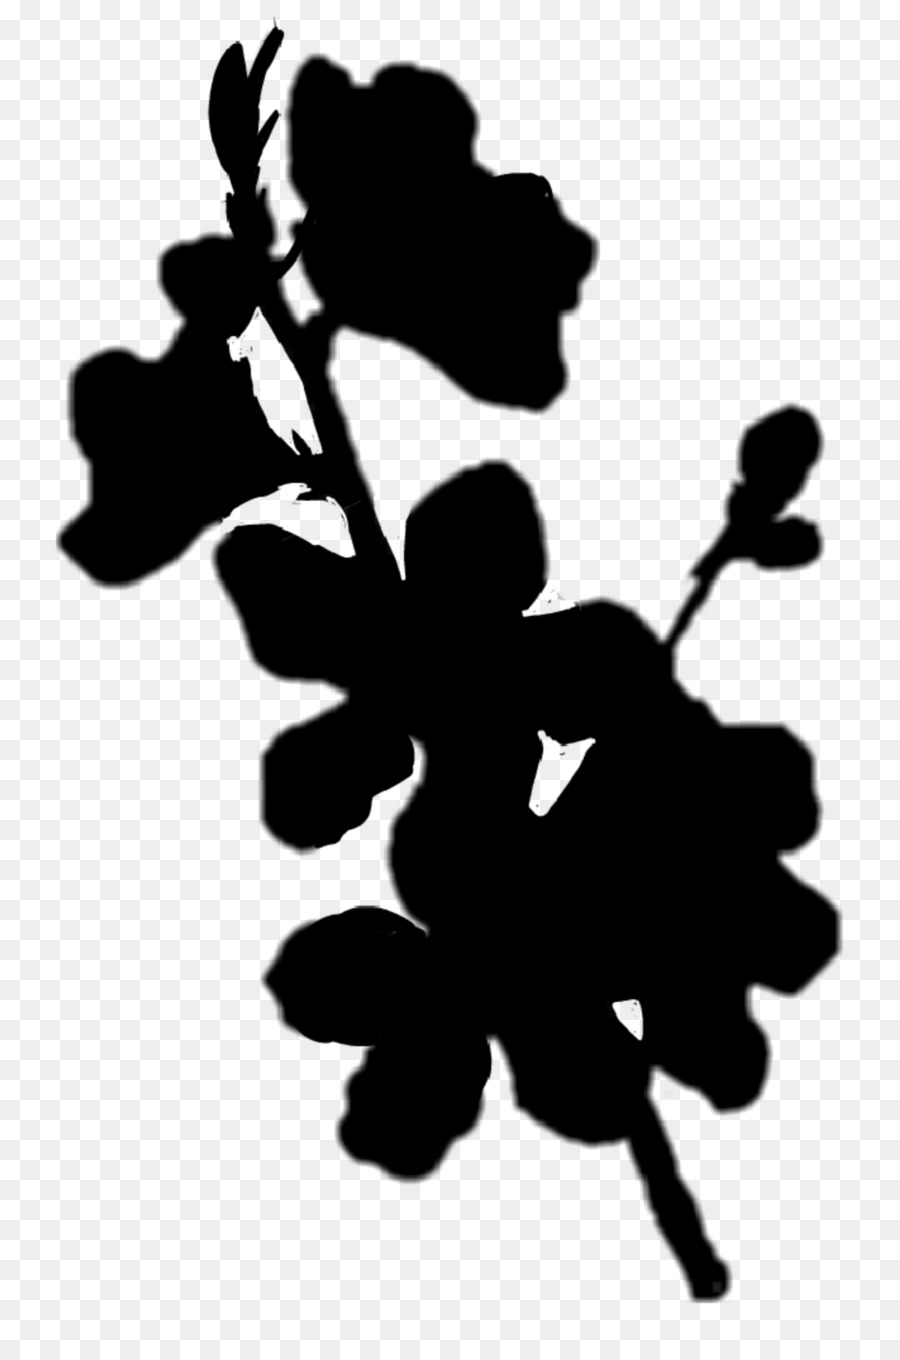 Clip art Flowering plant Silhouette Leaf -  png download - 1939*2896 - Free Transparent Flower png Download.